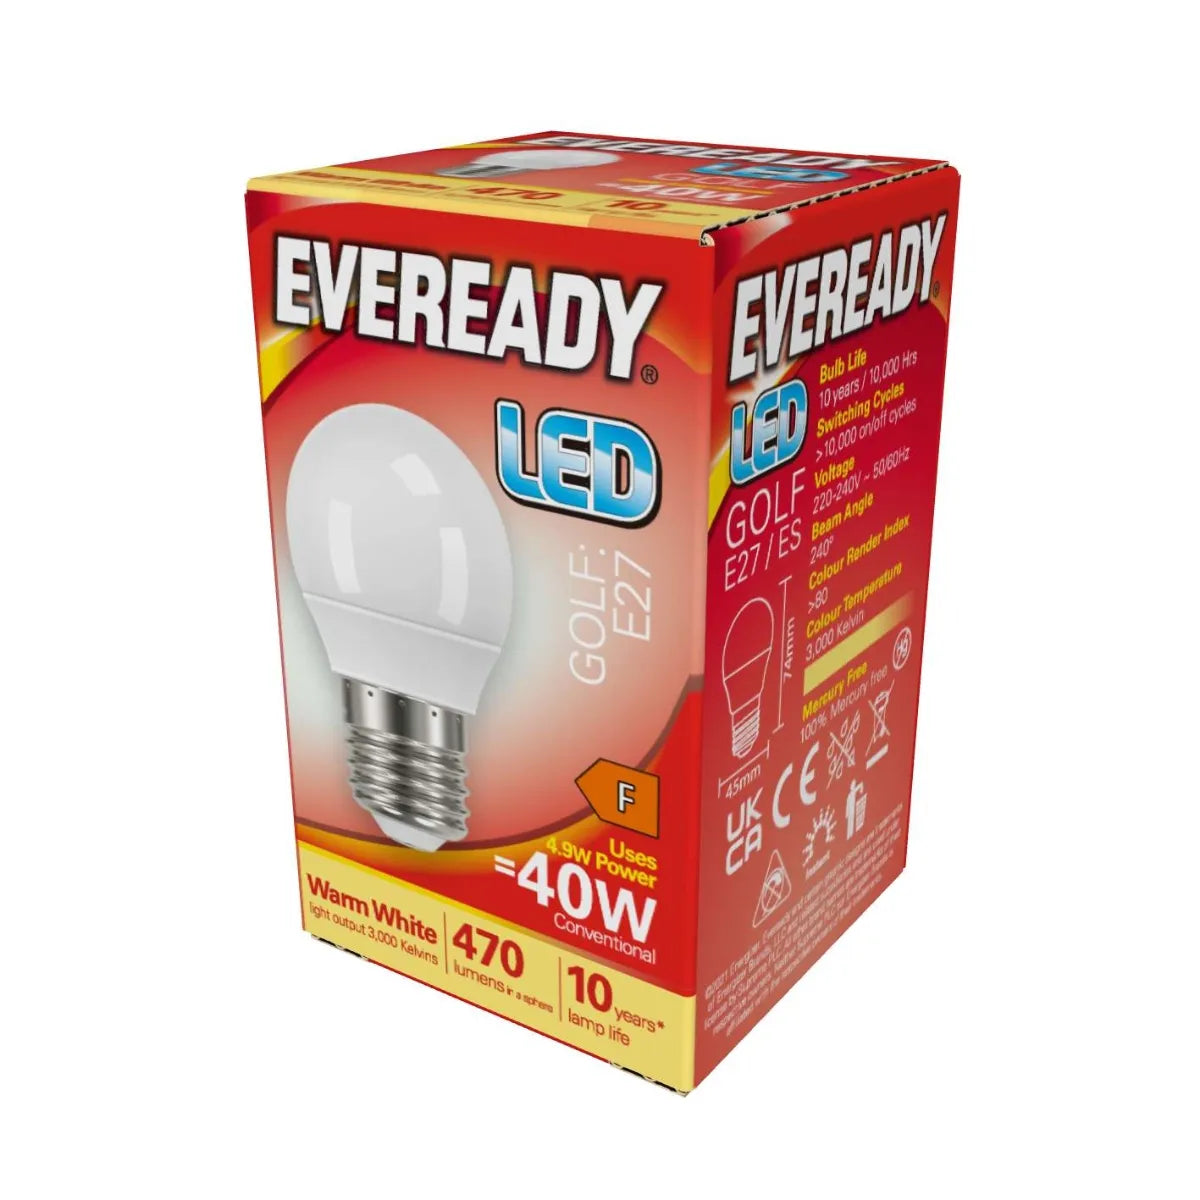 Eveready Golf E27 ES Edison 3000k 470 Lumens 5.2W Warm White LED Light Bulb 40W Replacement